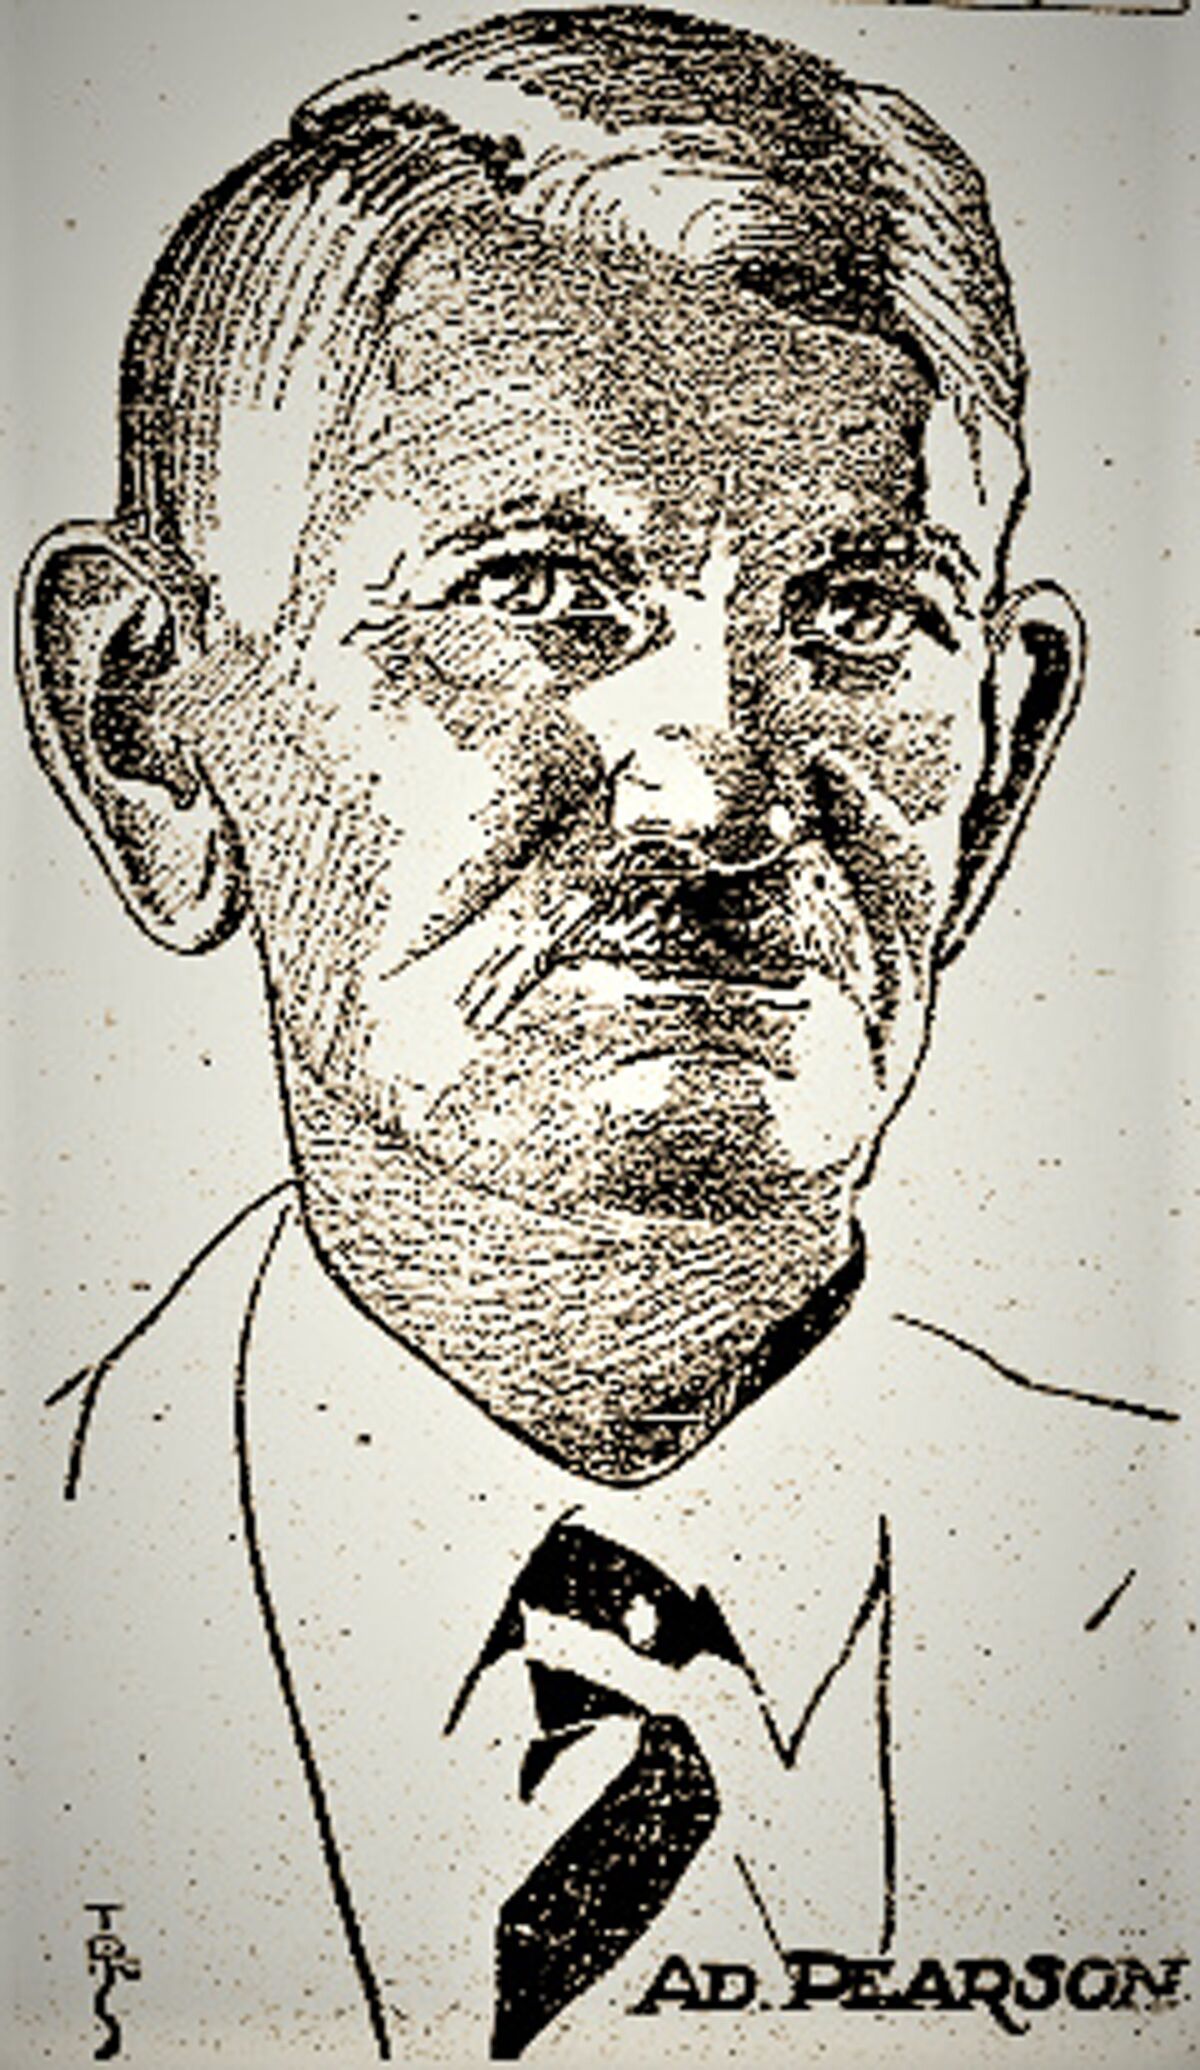 A formal portrait of Adalaska “Ad” Pearson, mayor of Duckville, in 1926.